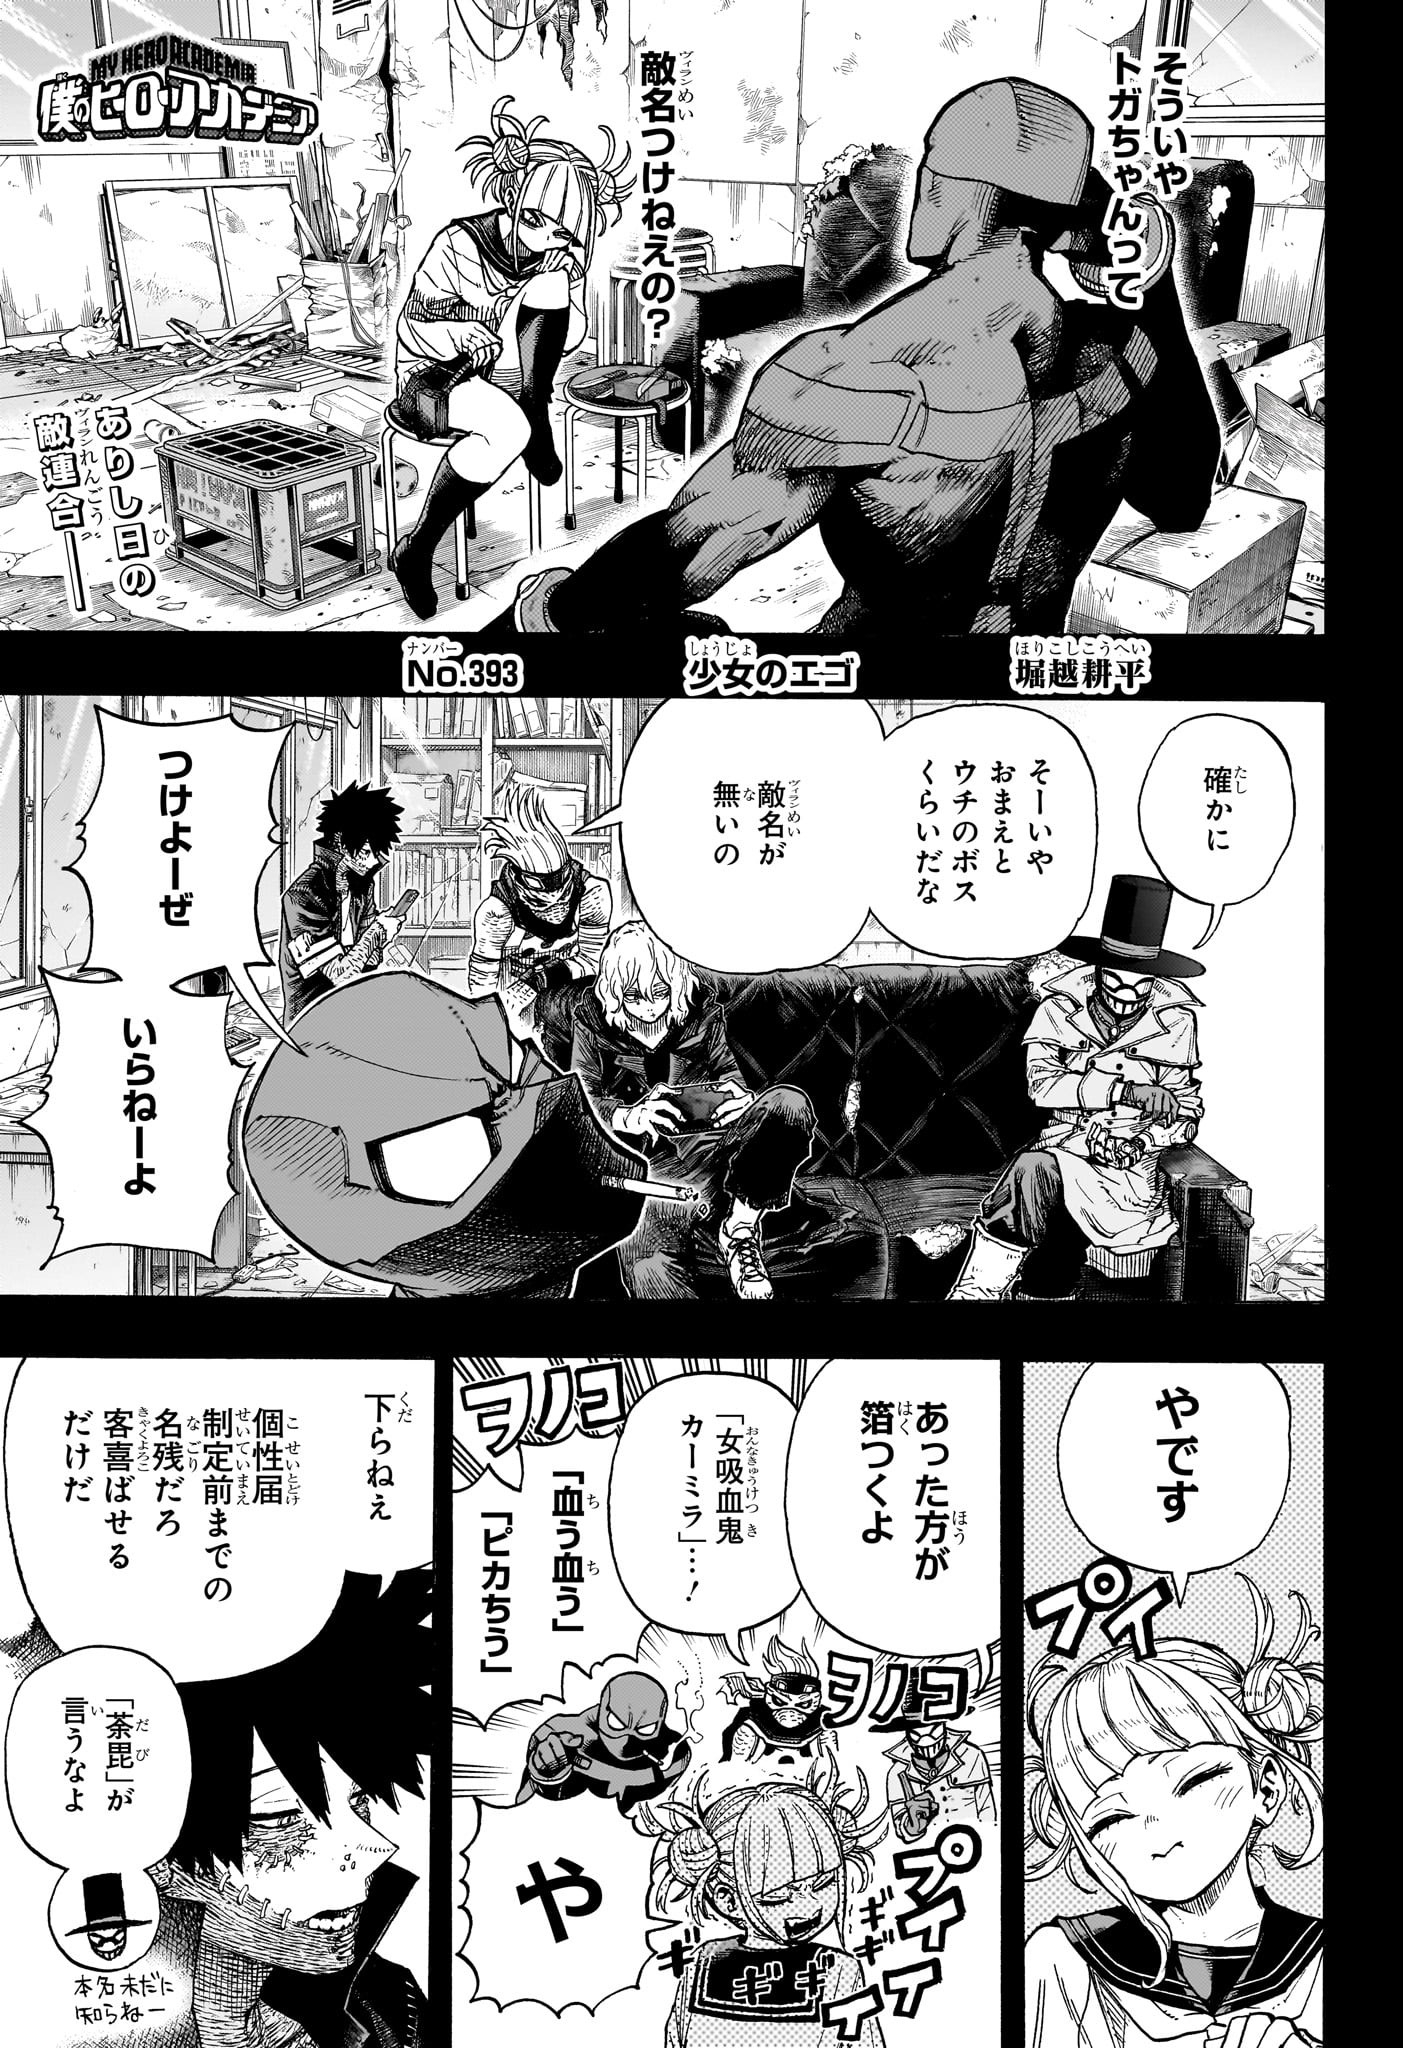 Boku no Hero Academia - Chapter 393 - Page 1